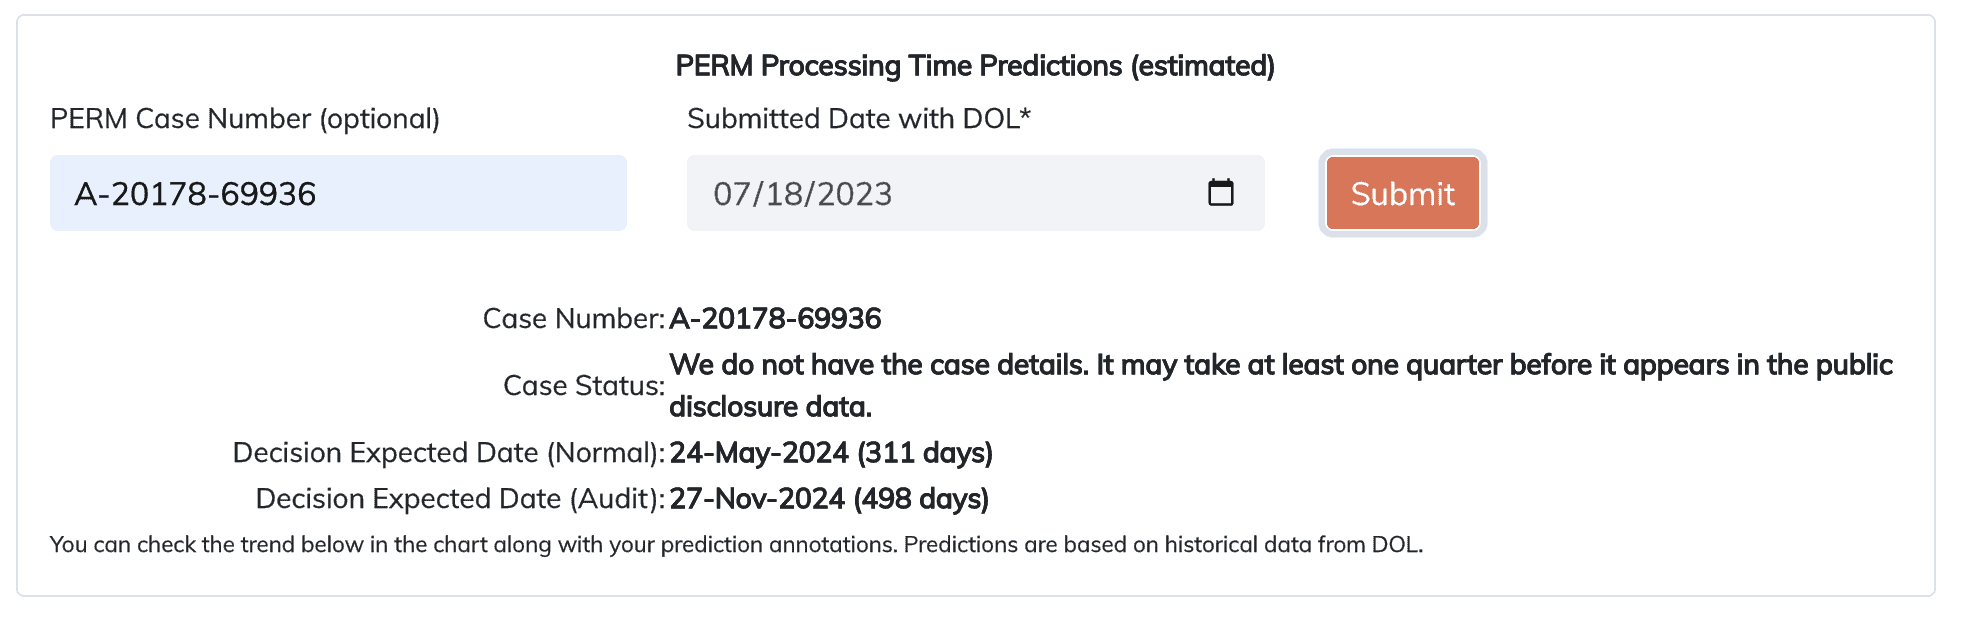 H1BGrader PERM Processing Times Prediction Result